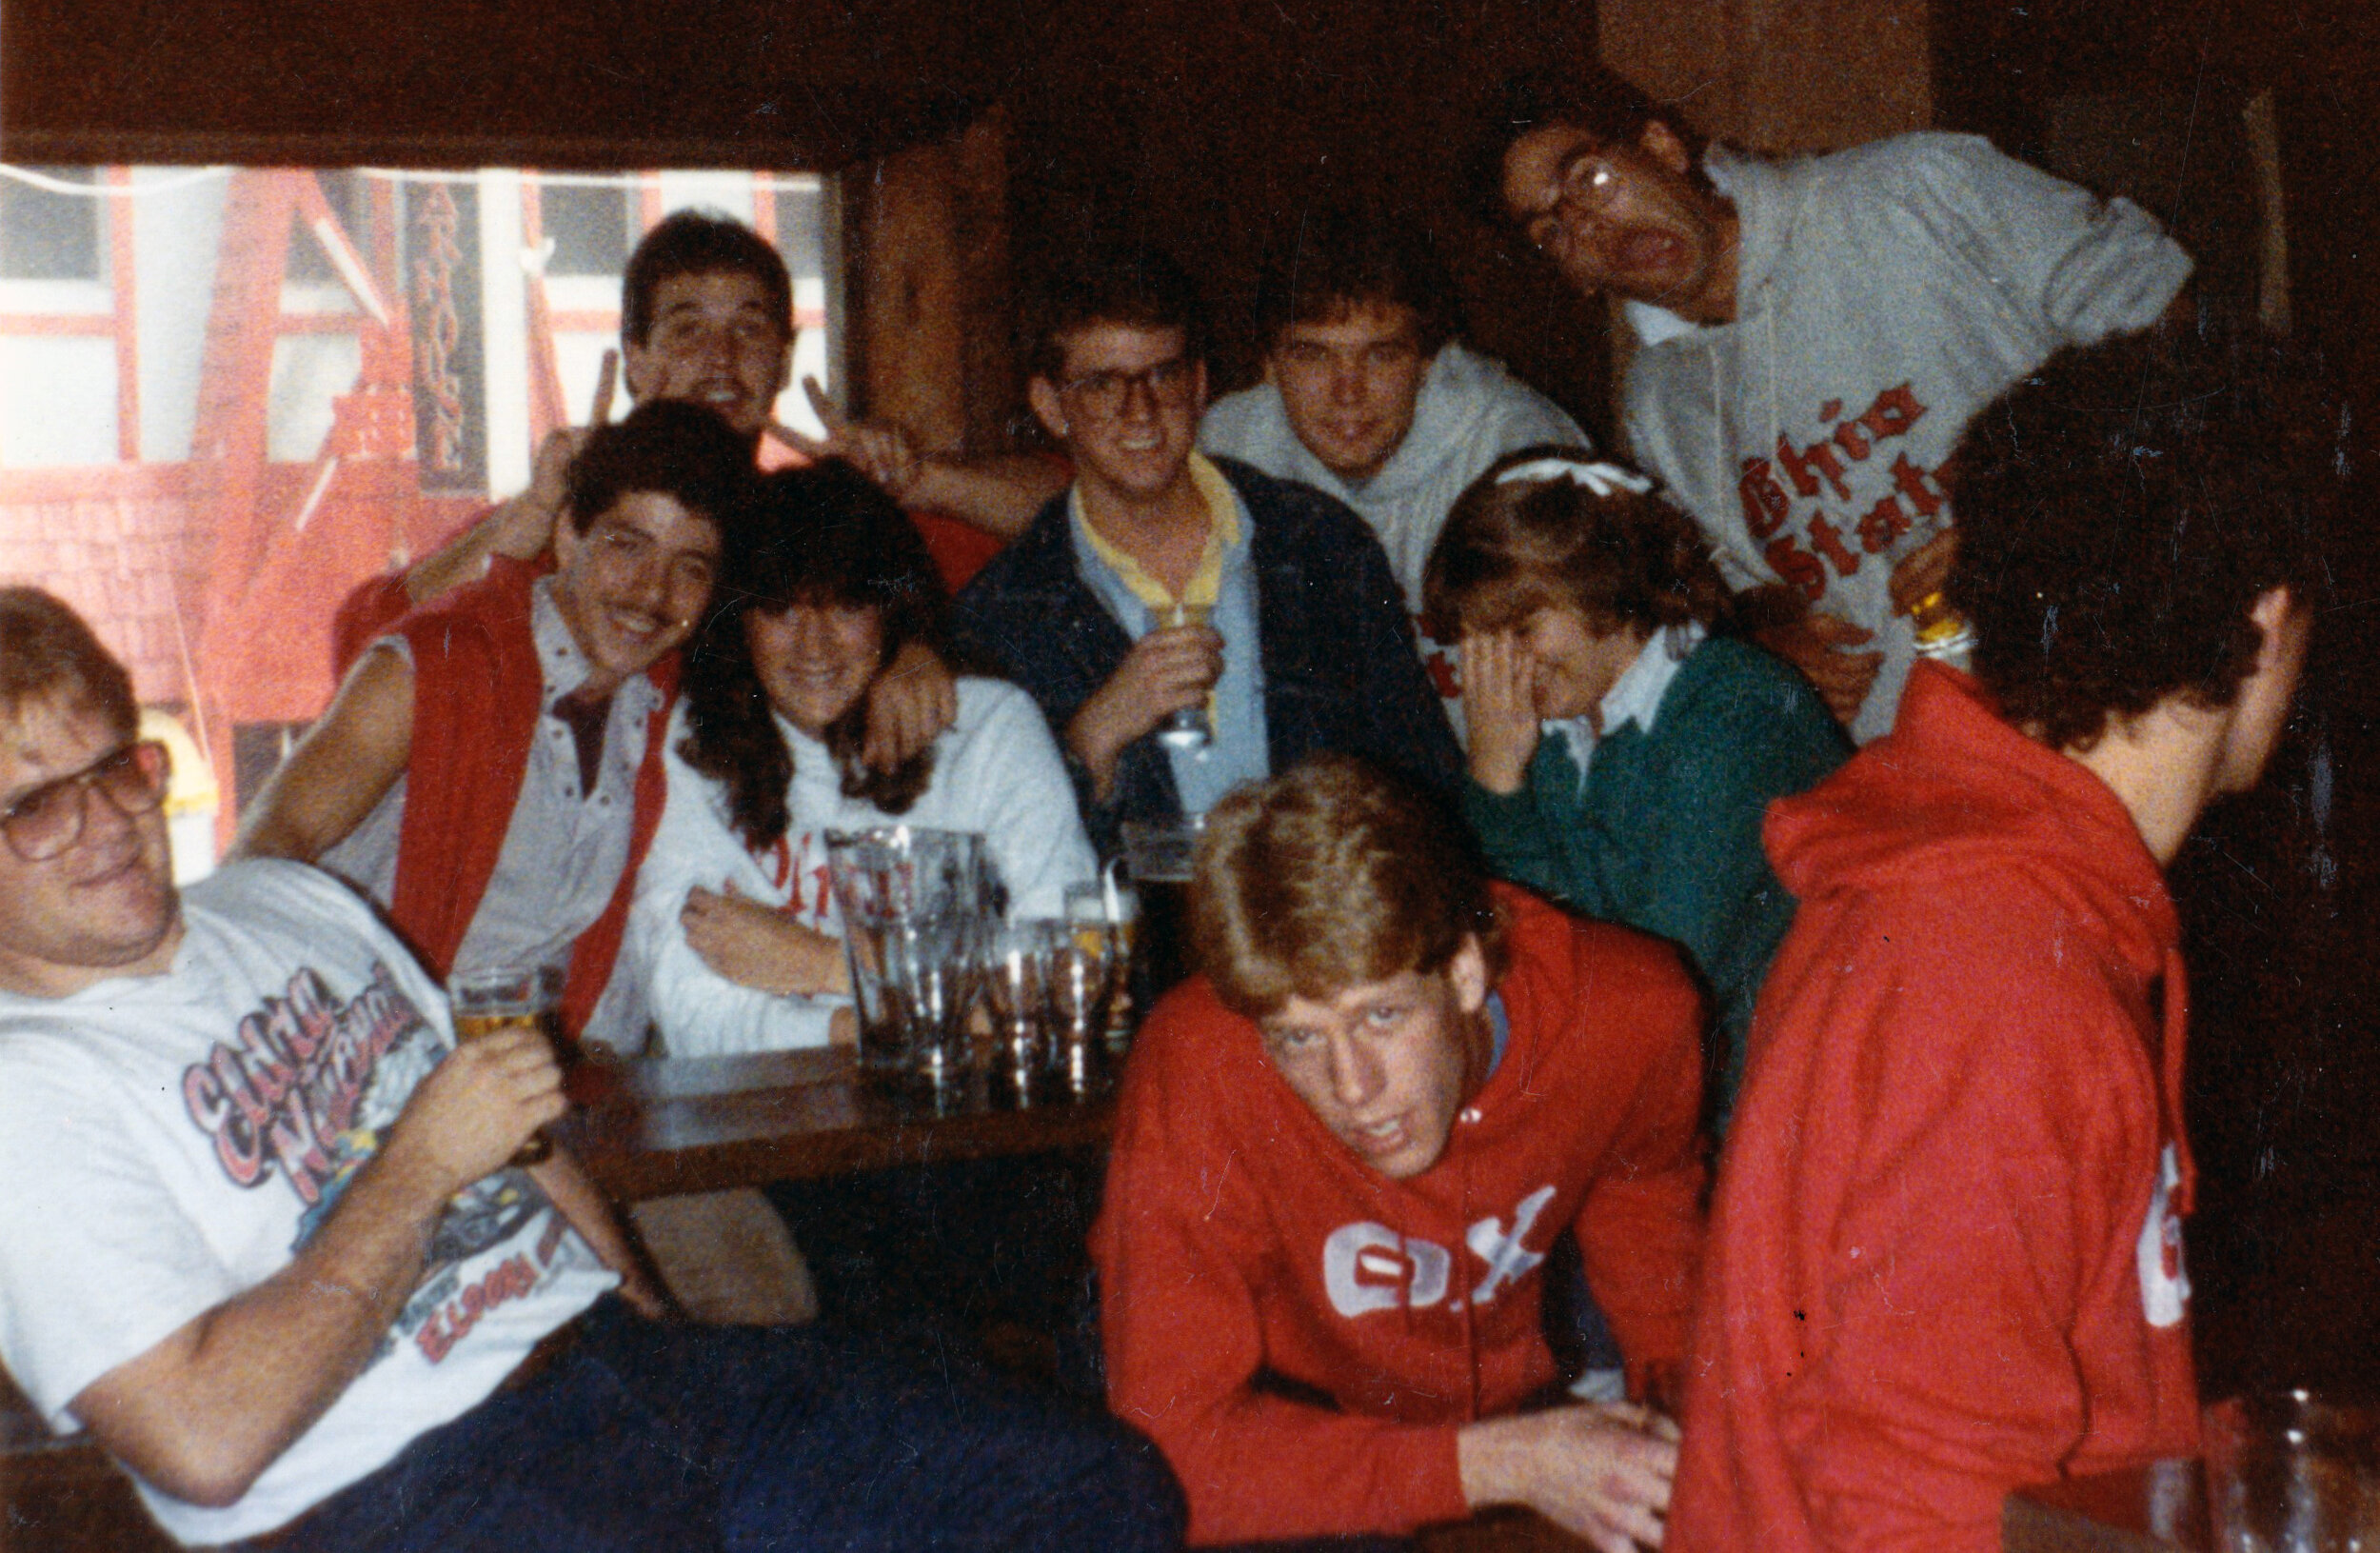  Clockwise from bottom left: Bob Miller, Joe Zazo, Bill Ross, David Carlson,  John Stagliano, TK, Joe Zazo, and Dave FerroFall 1984 Pledge Trip to Ohio State 